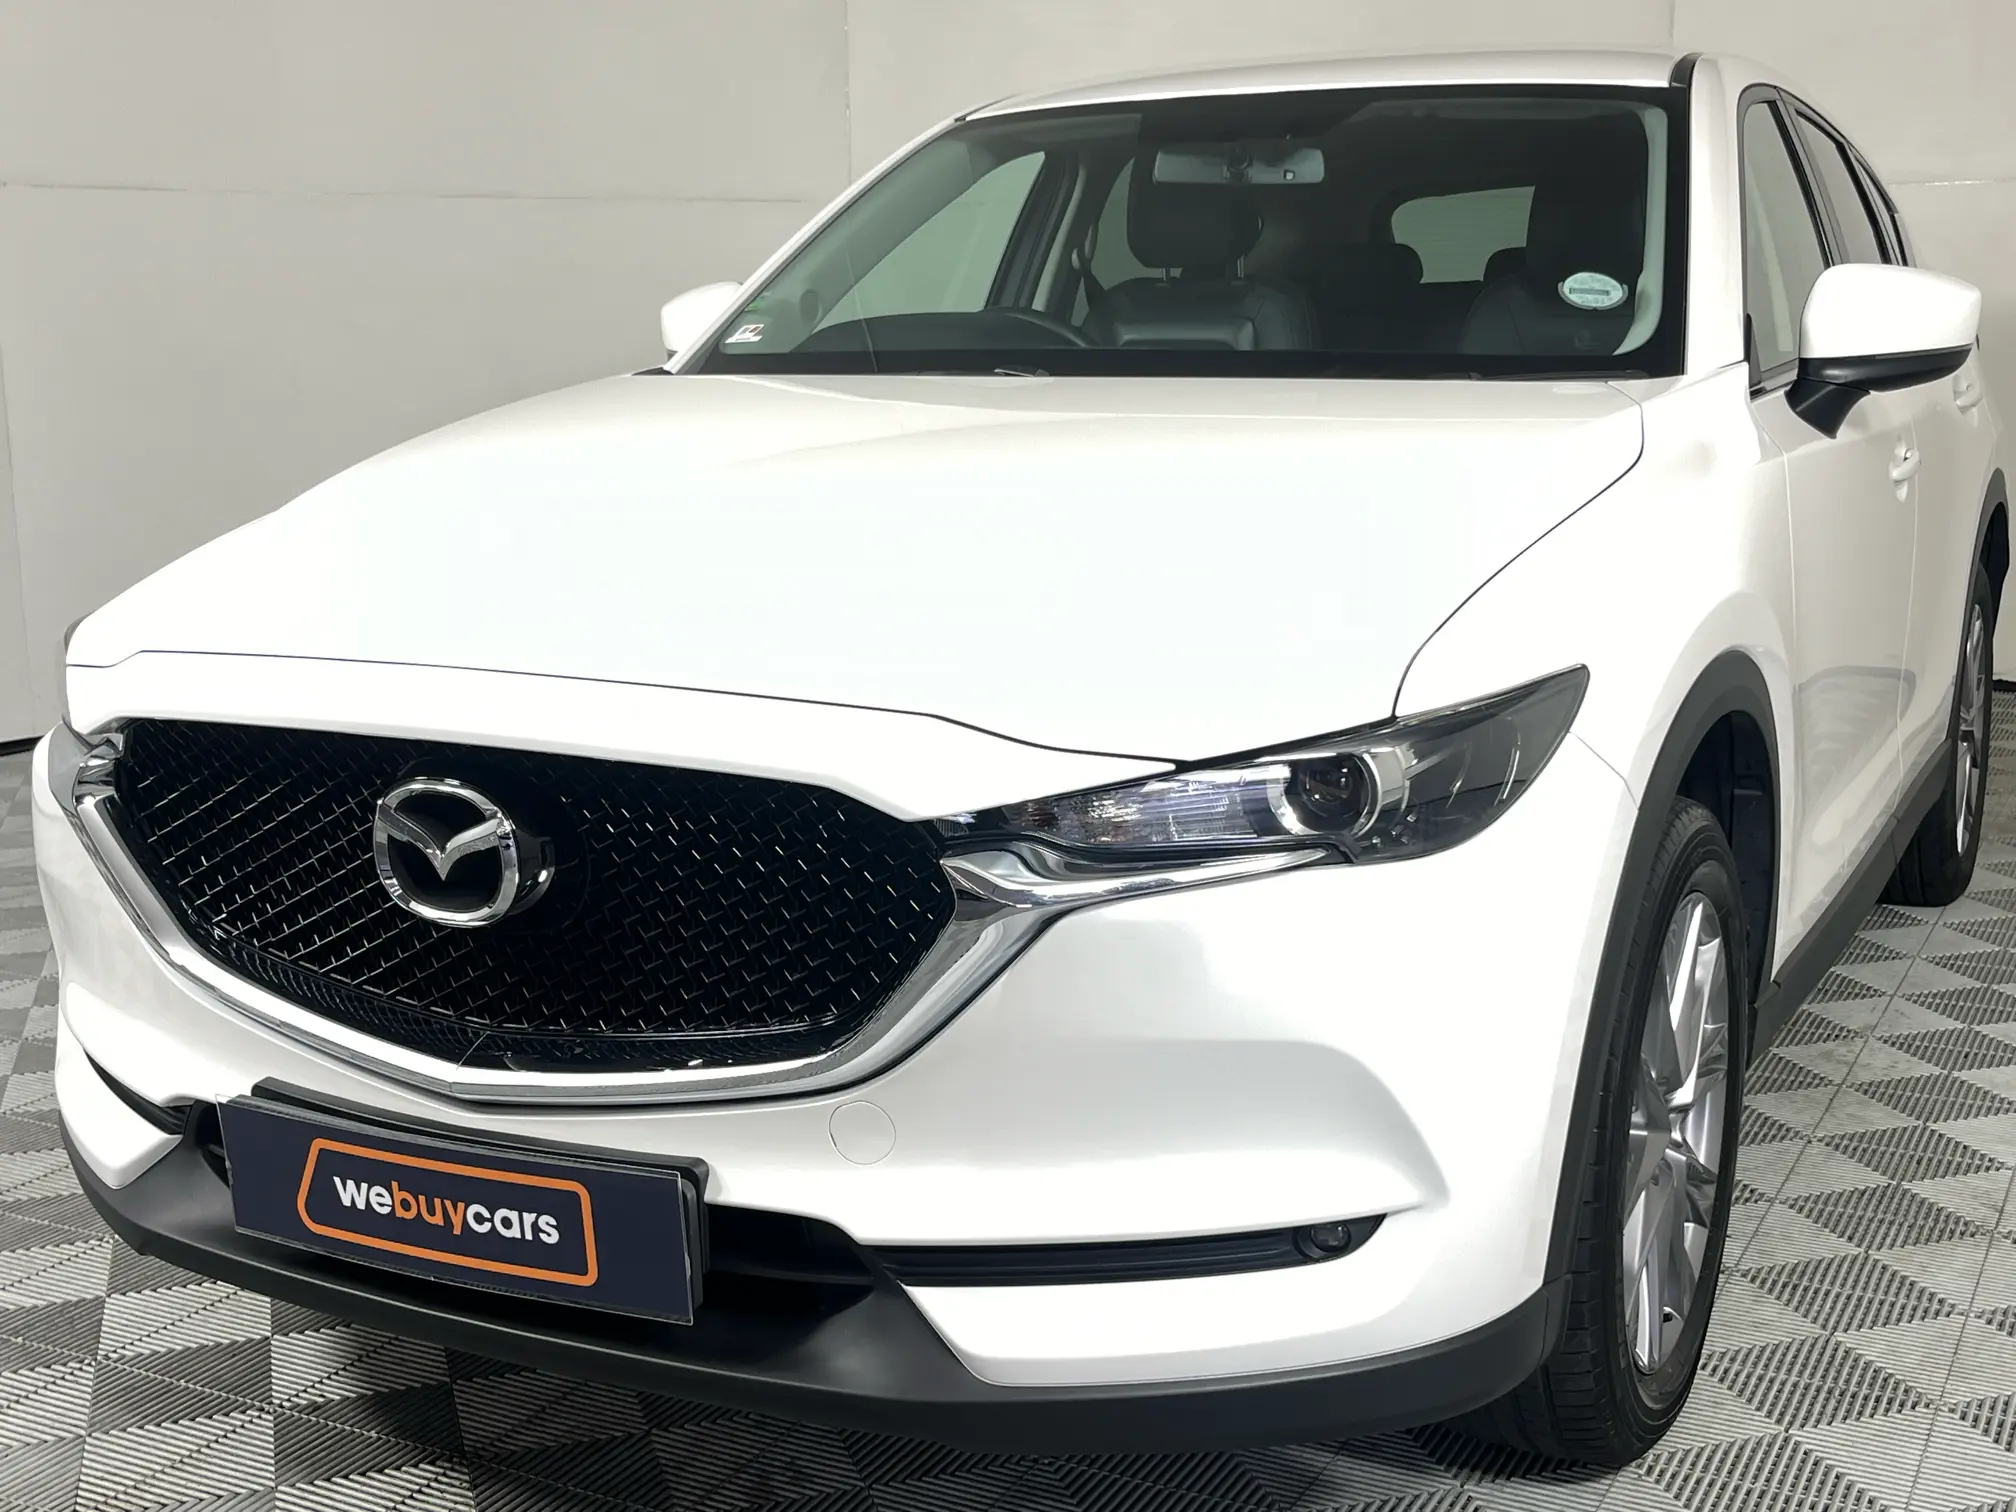 2019 Mazda CX-5 2.0 Dynamic Auto